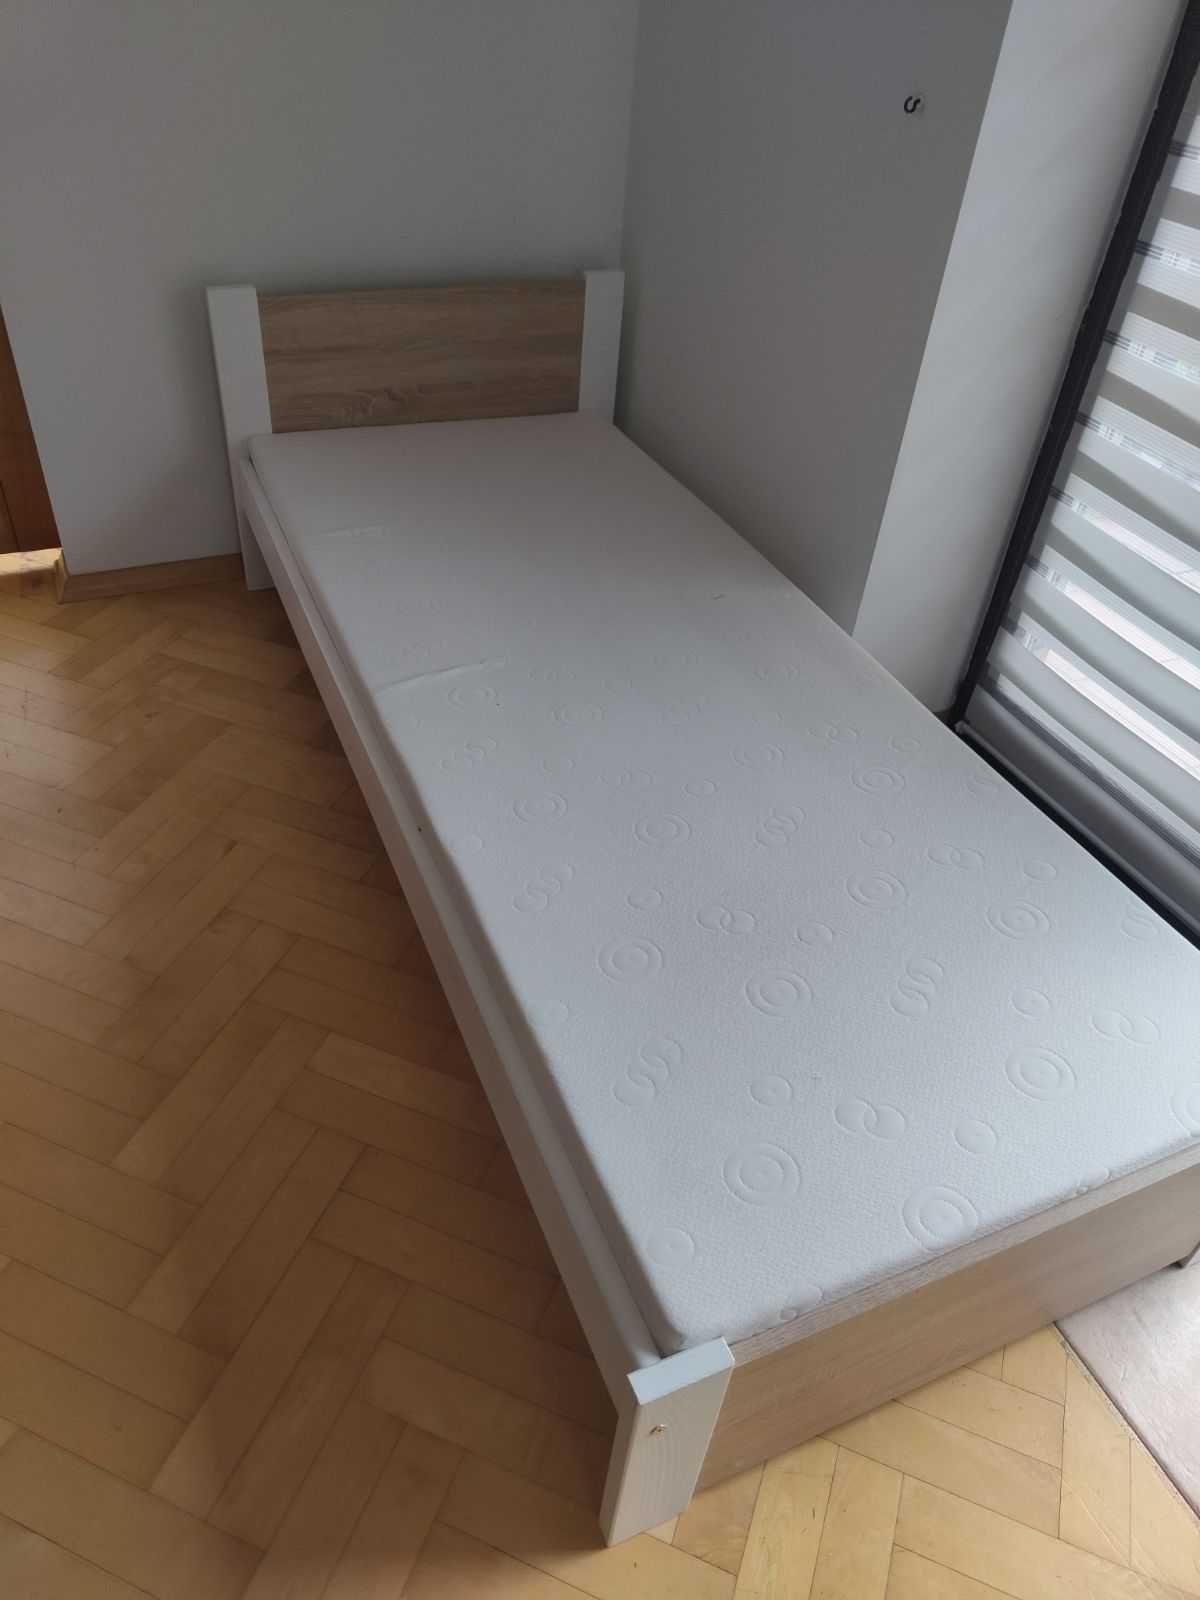 Łóżka używane różne